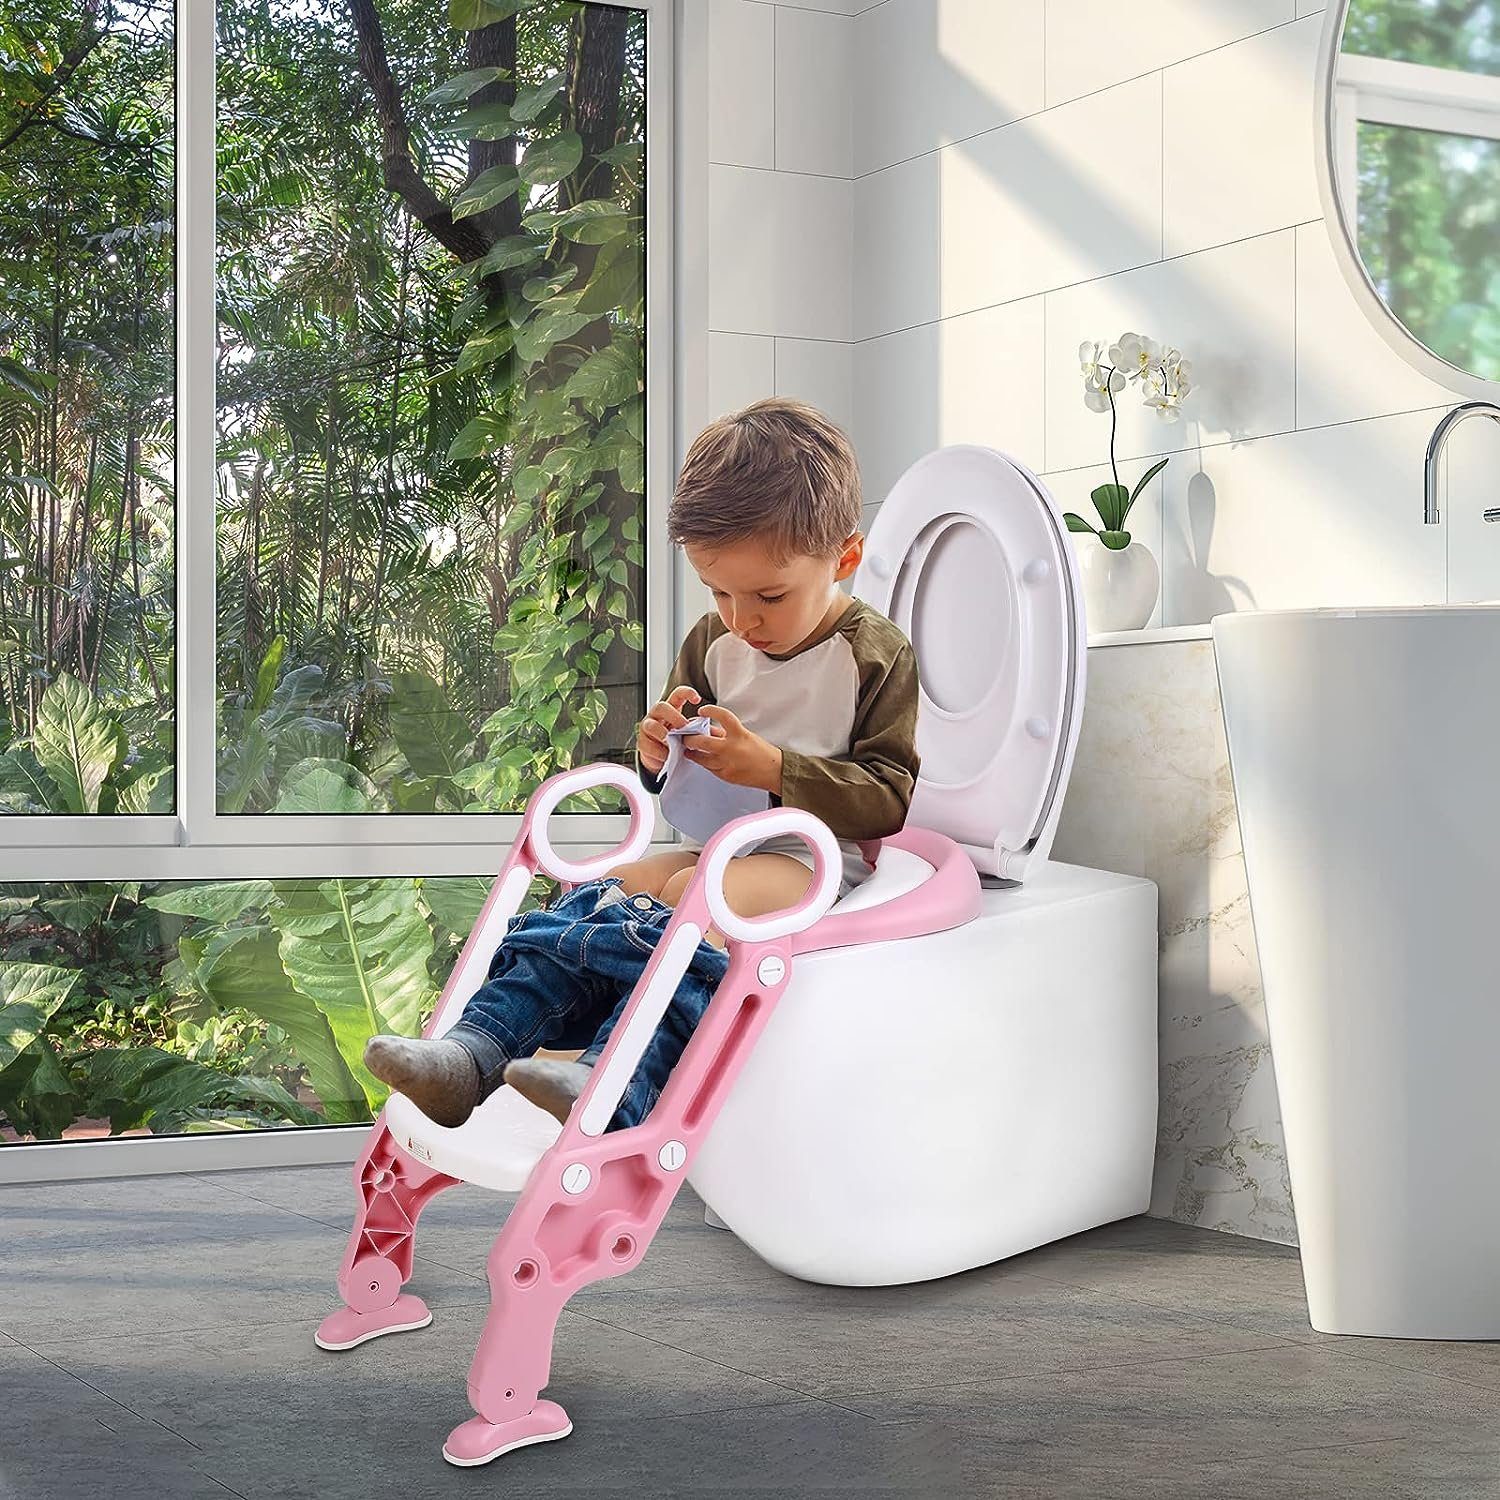 Toilettensitz HöHenverstellbar TLGREEN Kinder Rosa für Treppe, mit Toilettensitz kinder Toilettentrainer